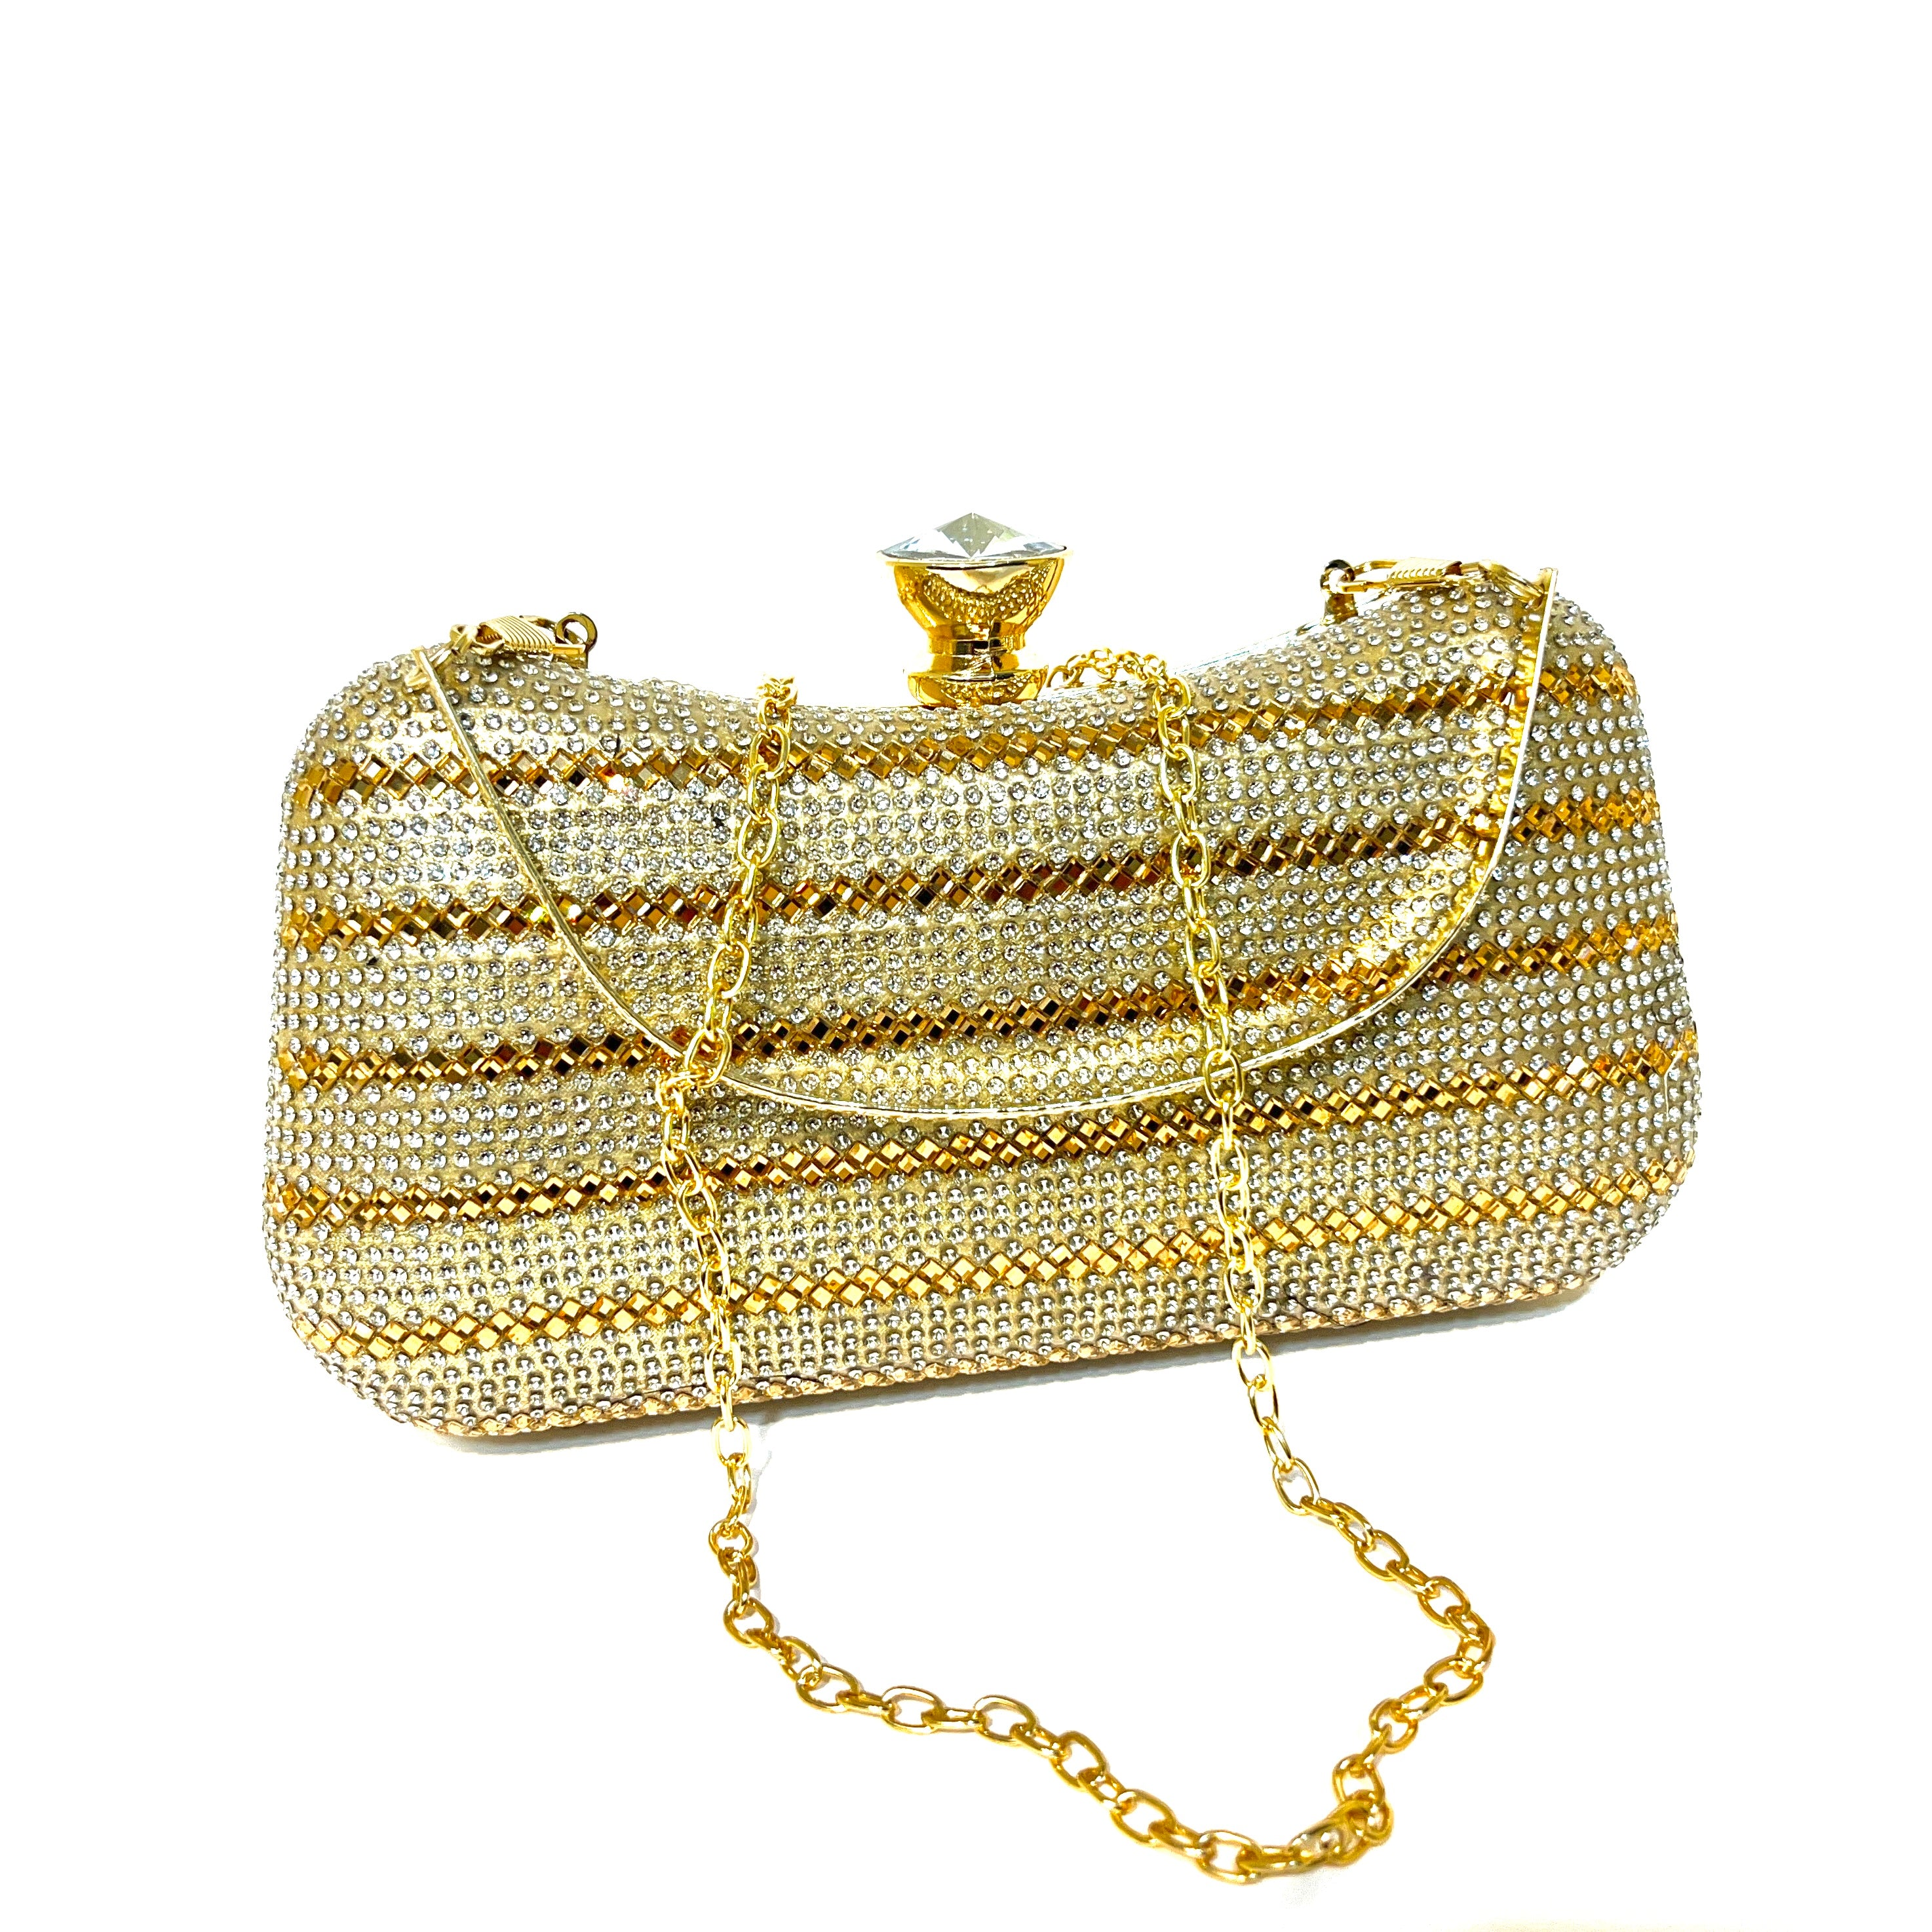 Woman Gold Handbag Isolated on White Background. Gold Handbag Isolated  Stock Image - Image of metal, glamour: 157164815